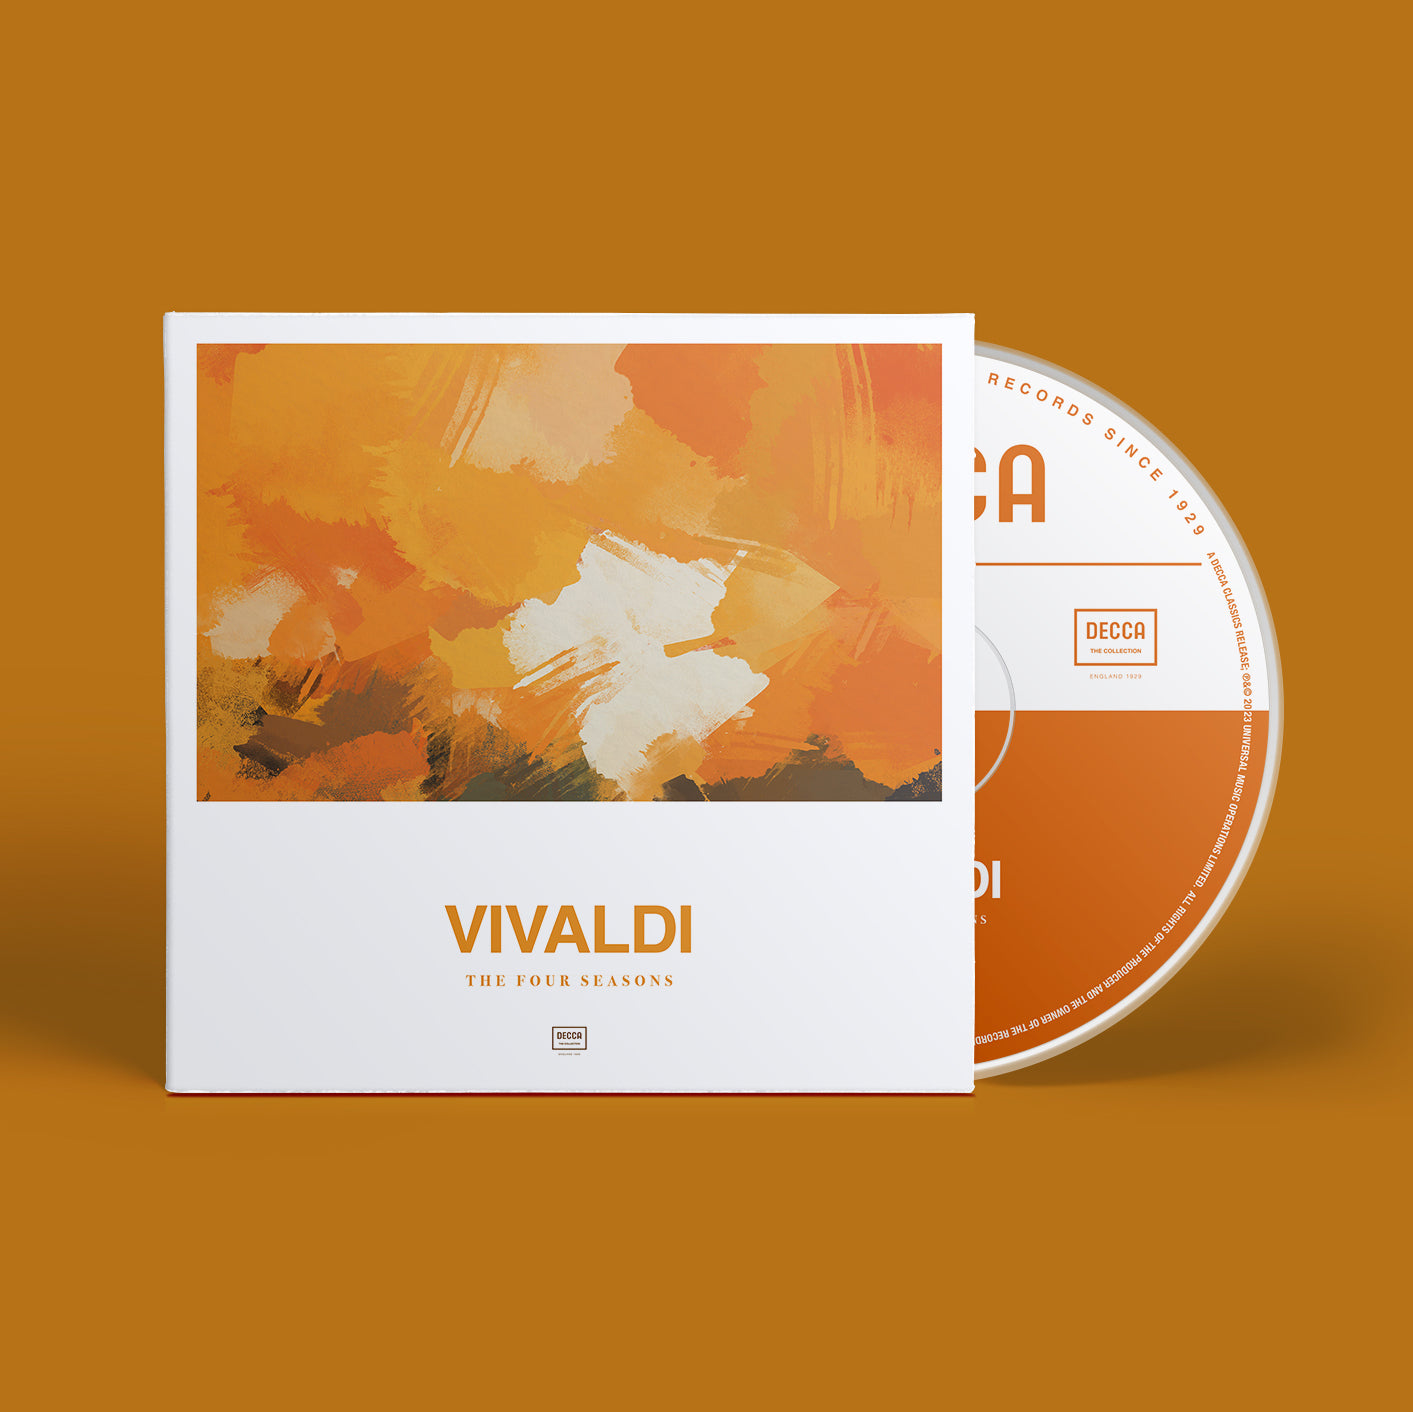 Antonio Vivaldi - Vivaldi - The Four Seasons (Decca - The Collection): CD